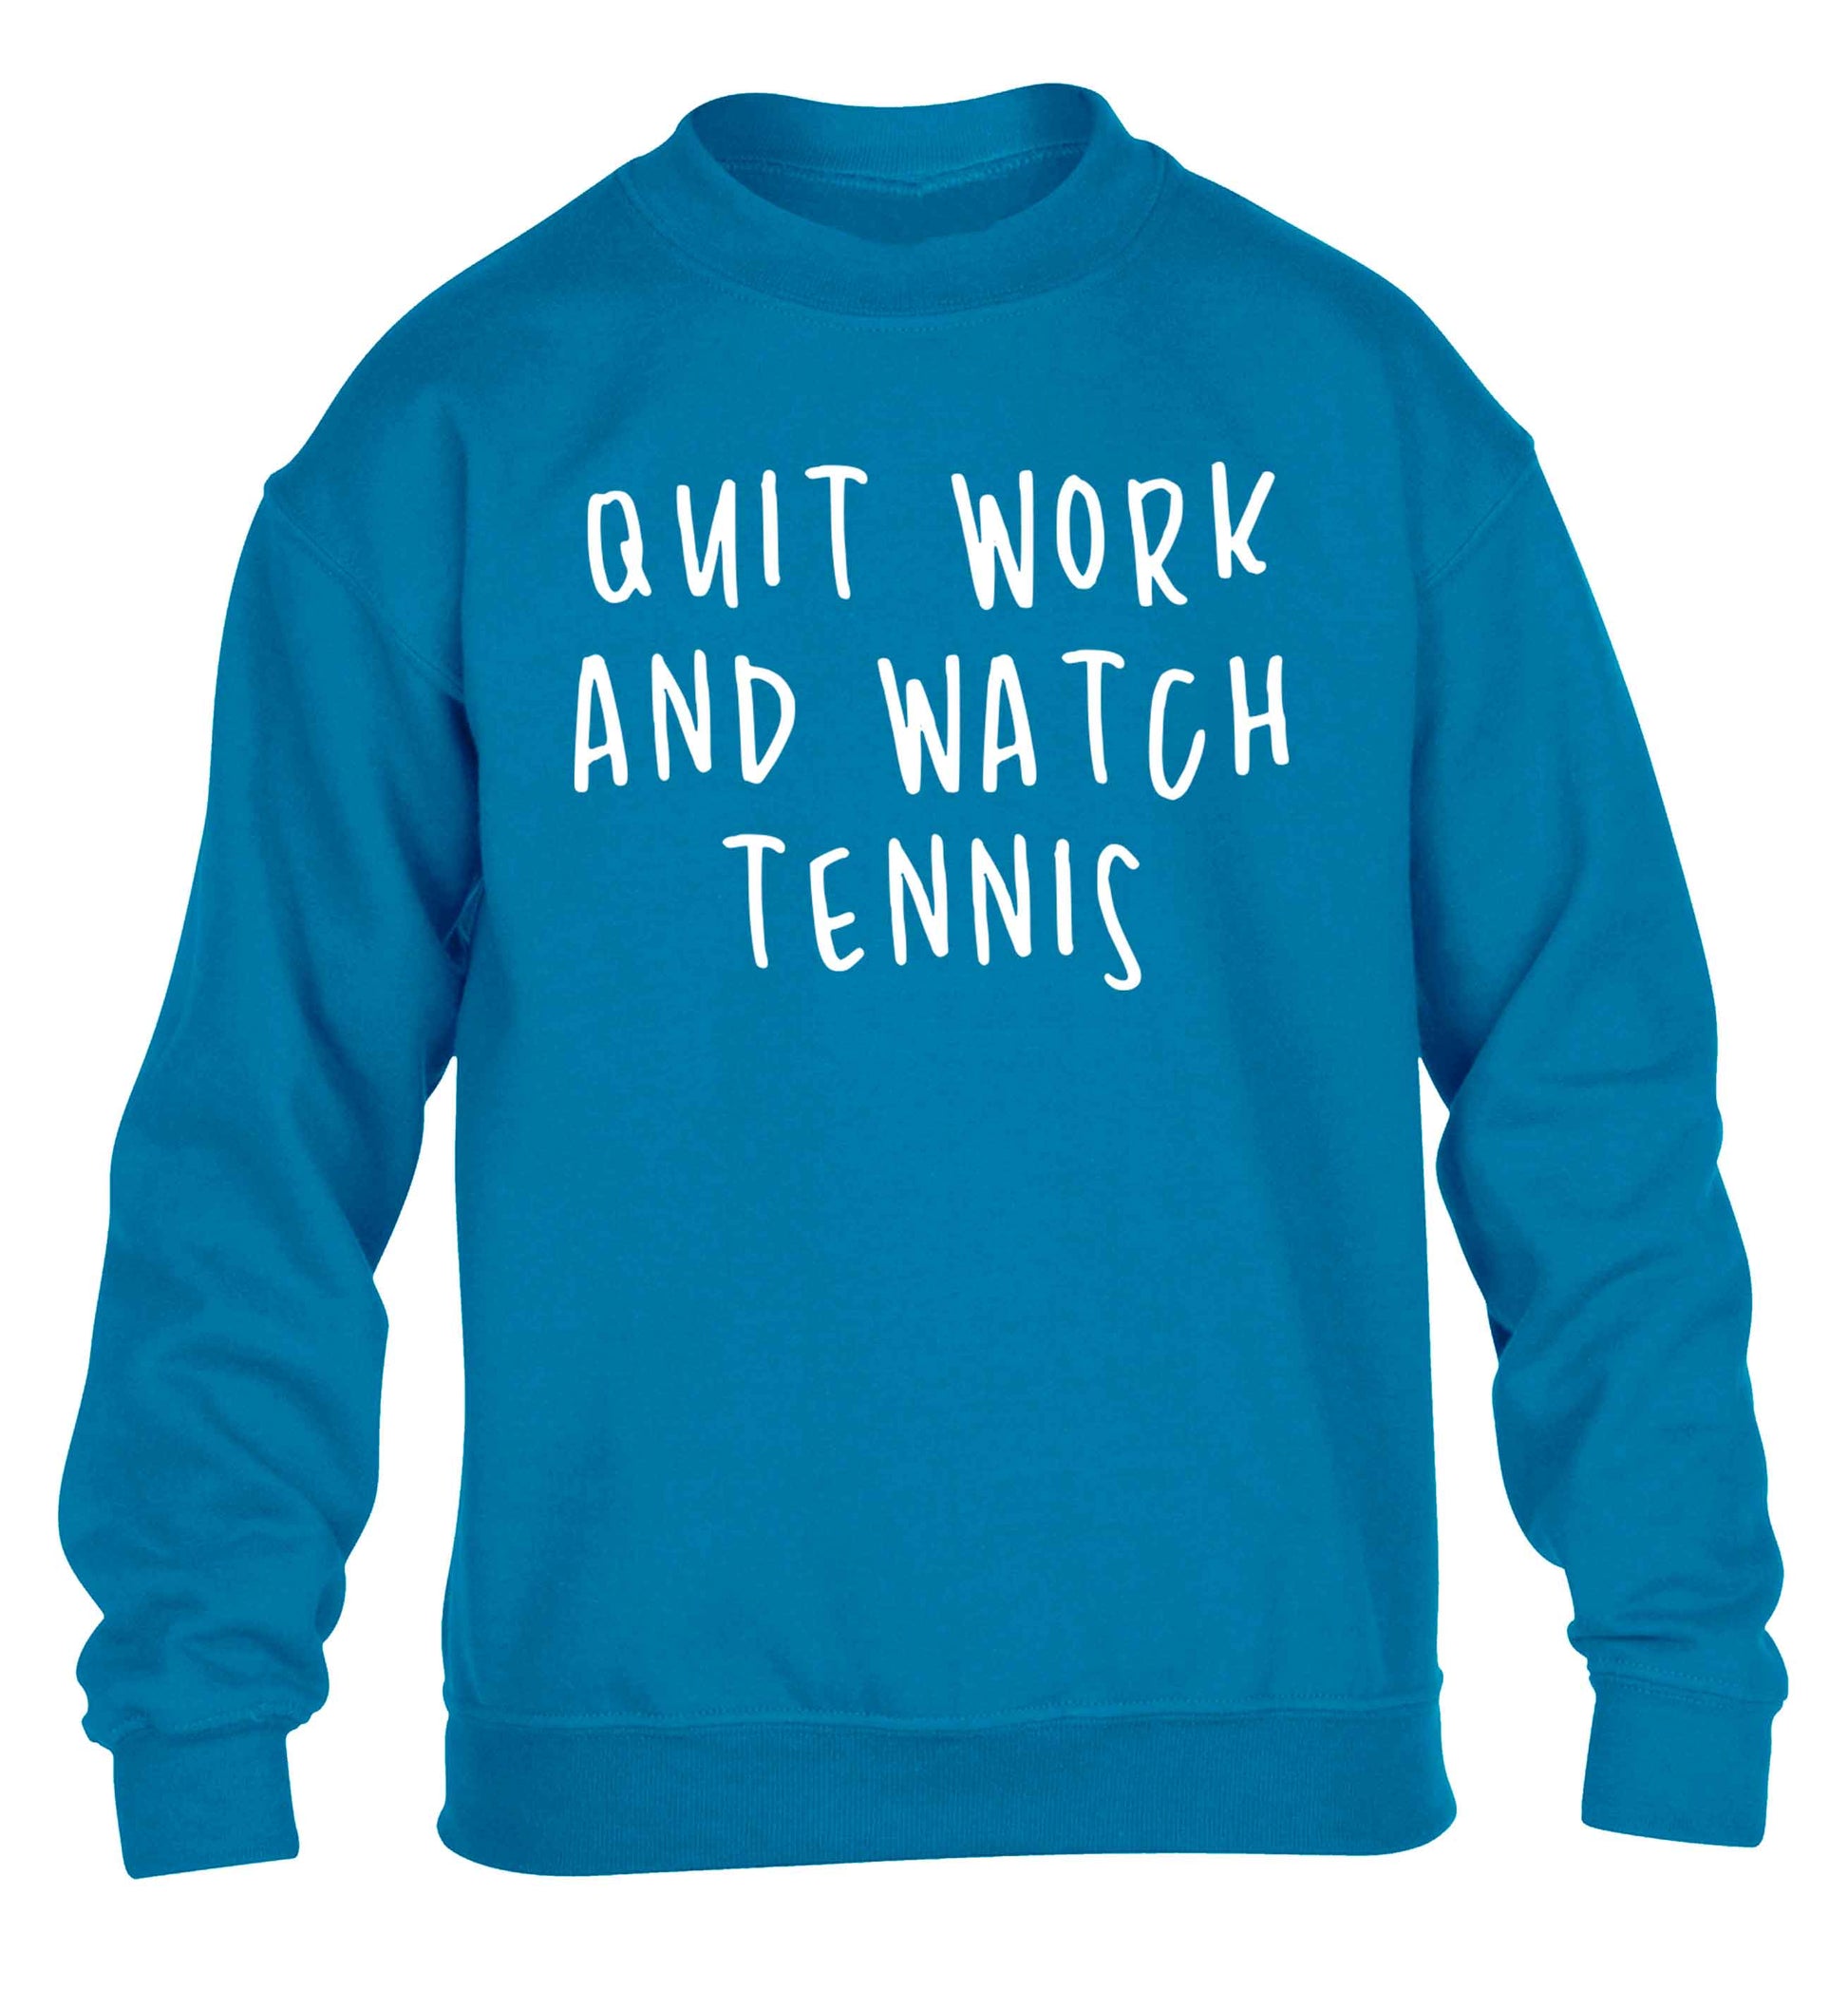 Quit work and watch tennis children's blue sweater 12-13 Years